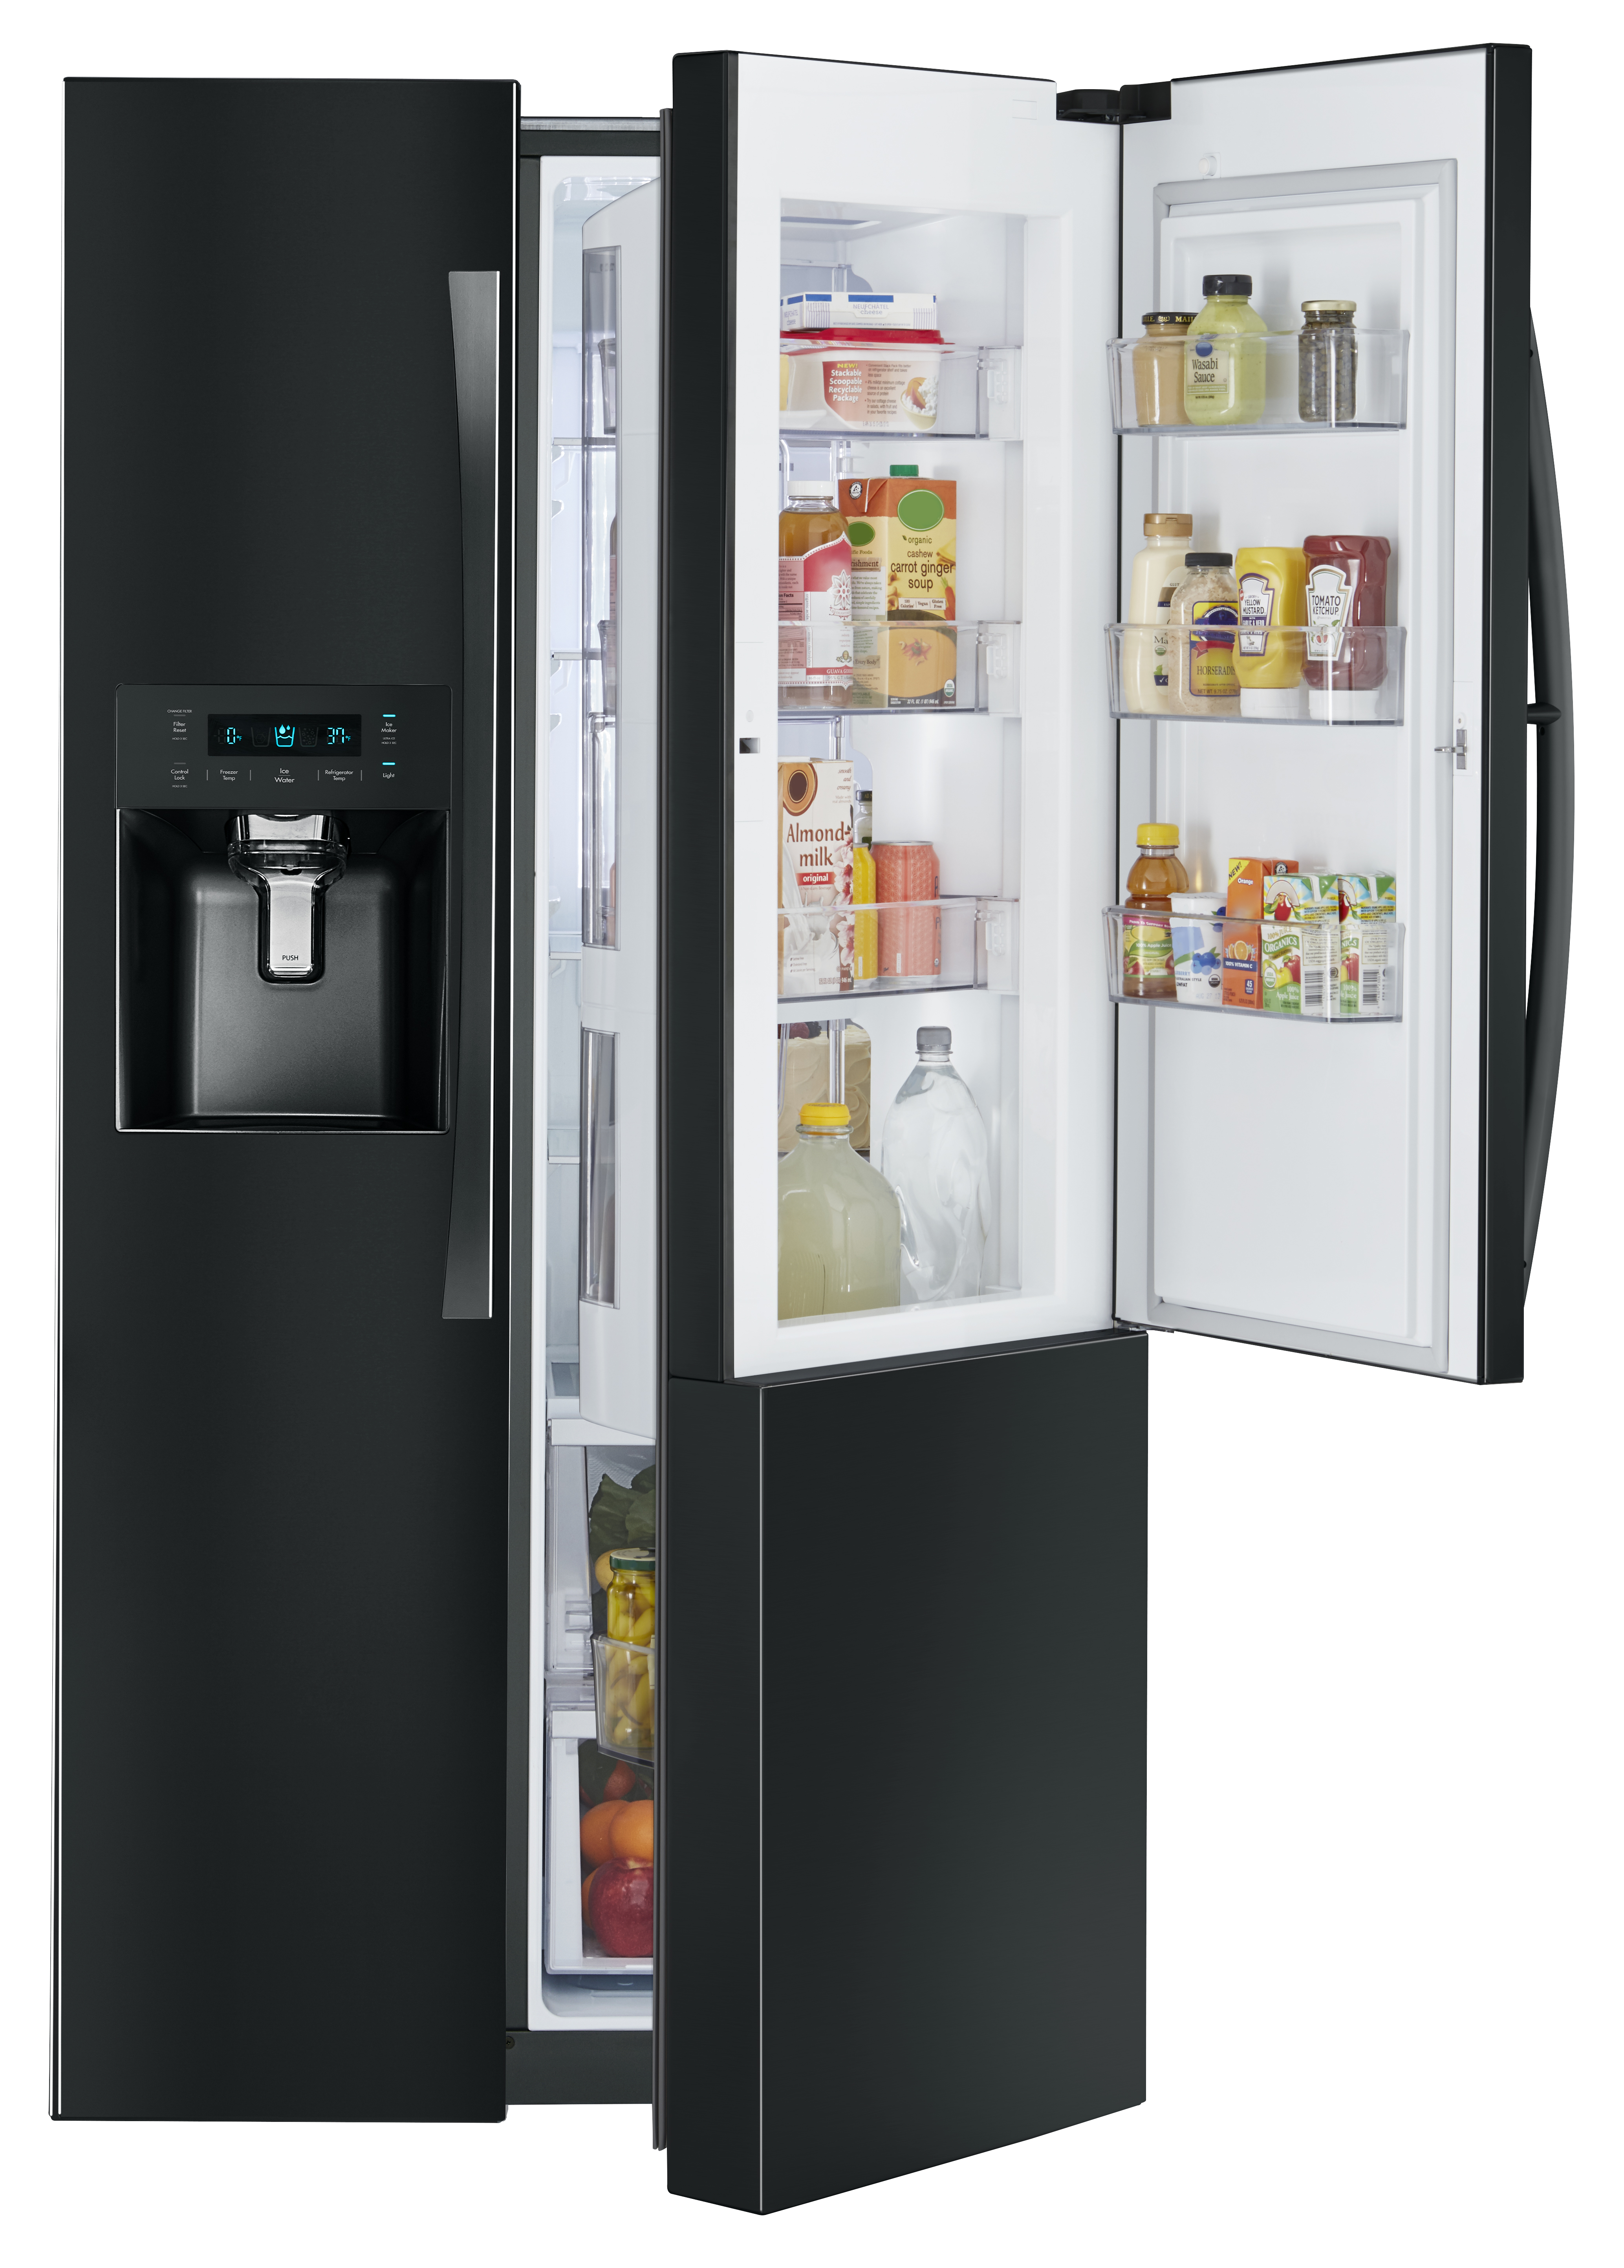 Холодильник с ледогенератором купить. Холодильник Side by Side с ледогенератором. Холодильник LG двухдверный с ледогенератором. Холодильник Side by Side eigen. Холодильник (Side-by-Side) Novex nssn017832s.